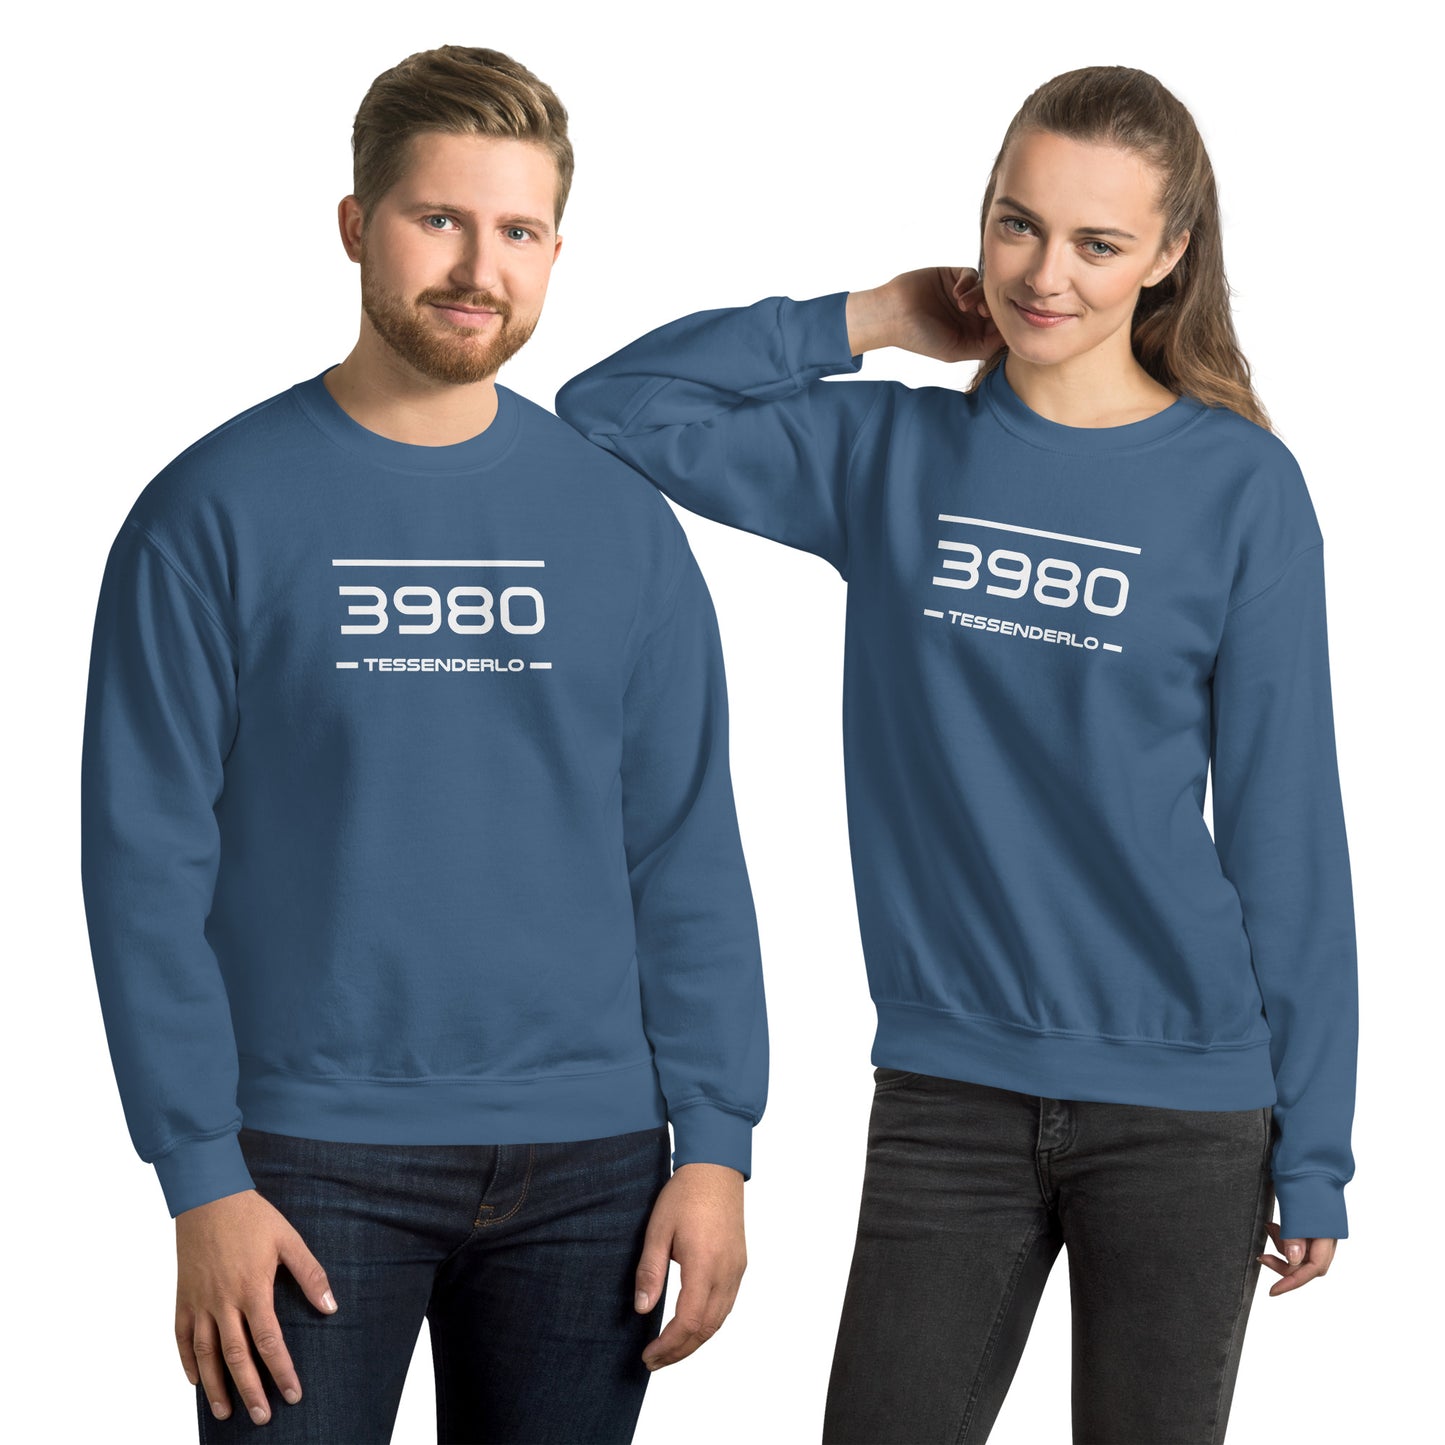 Sweater - 3980 - Tessenderlo (M/V)